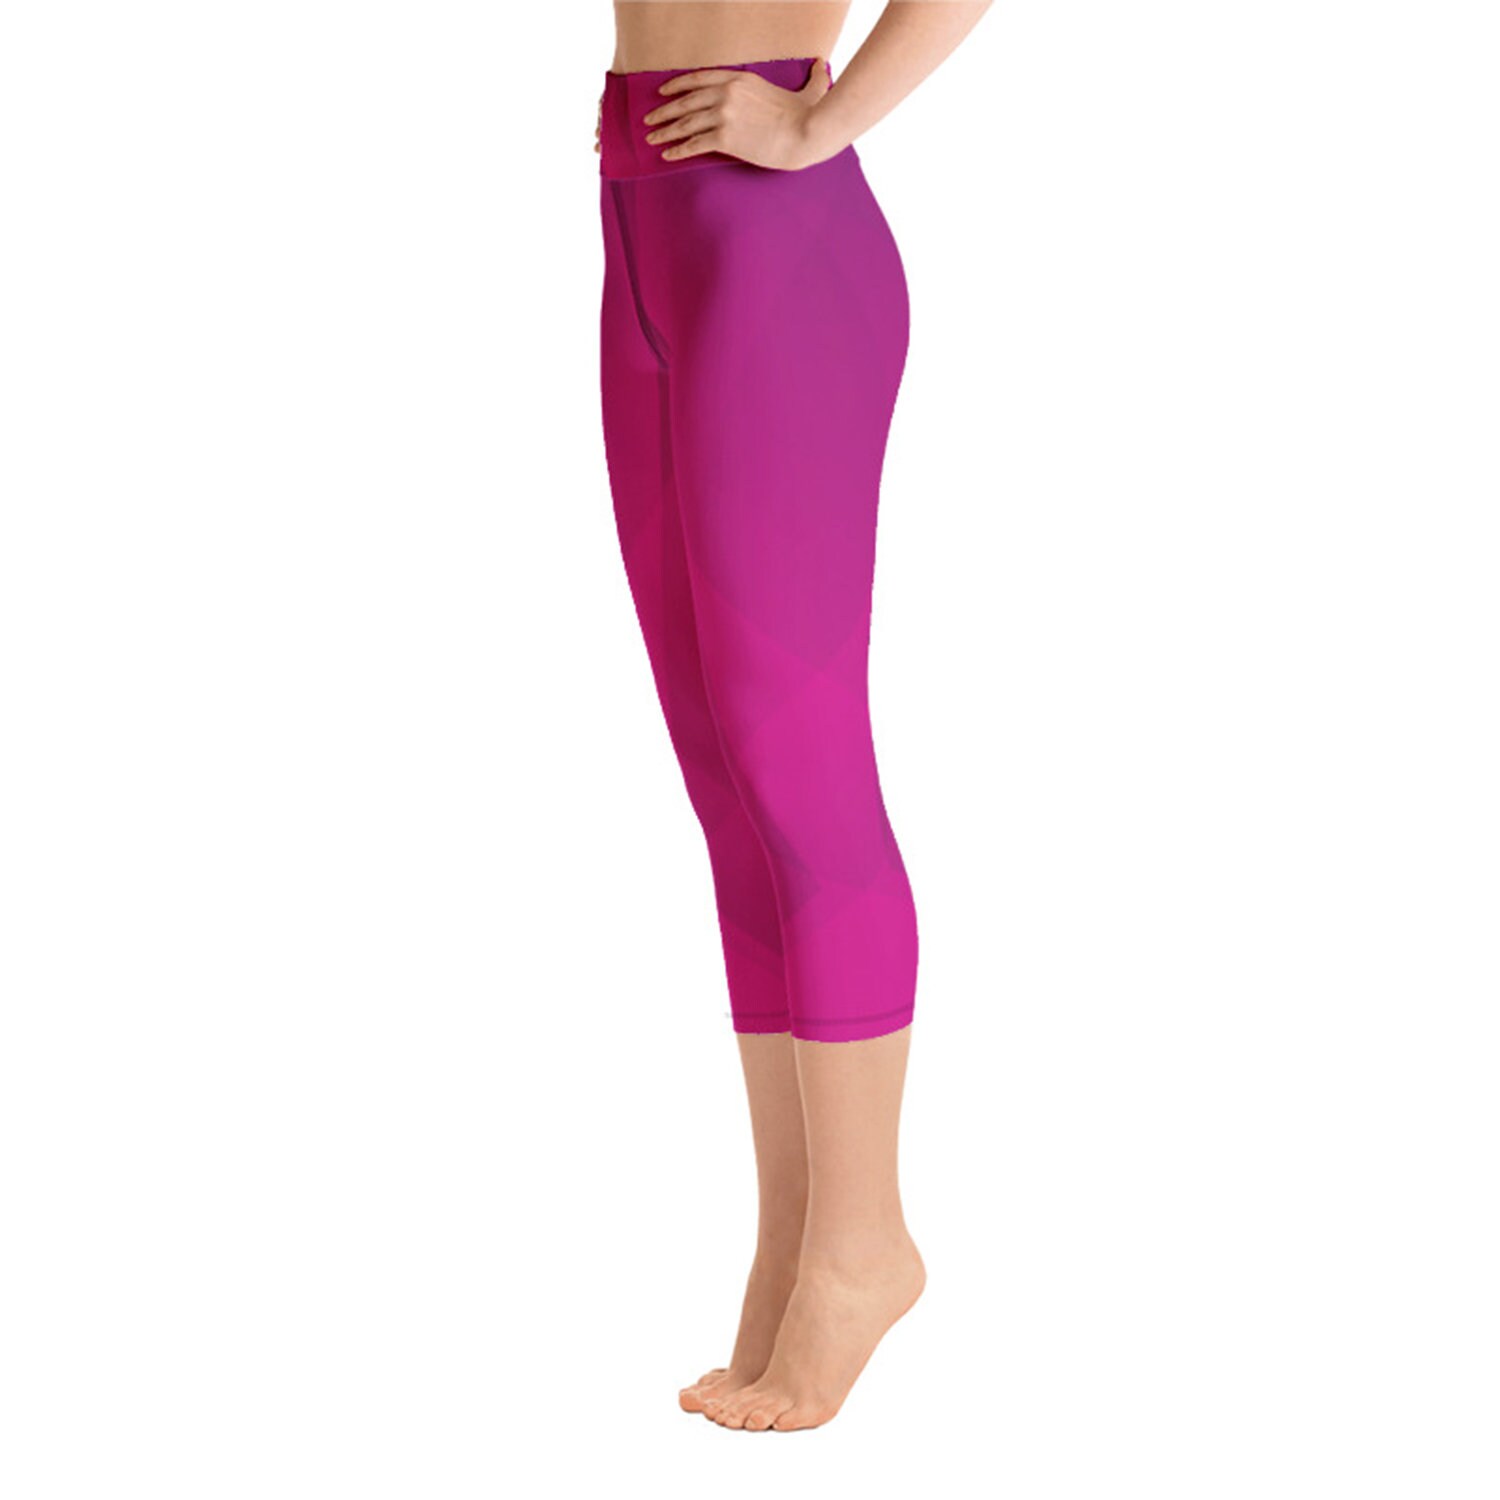 LMB Capri Leggings for Women Buttery Soft Polyester Fabric, Purple